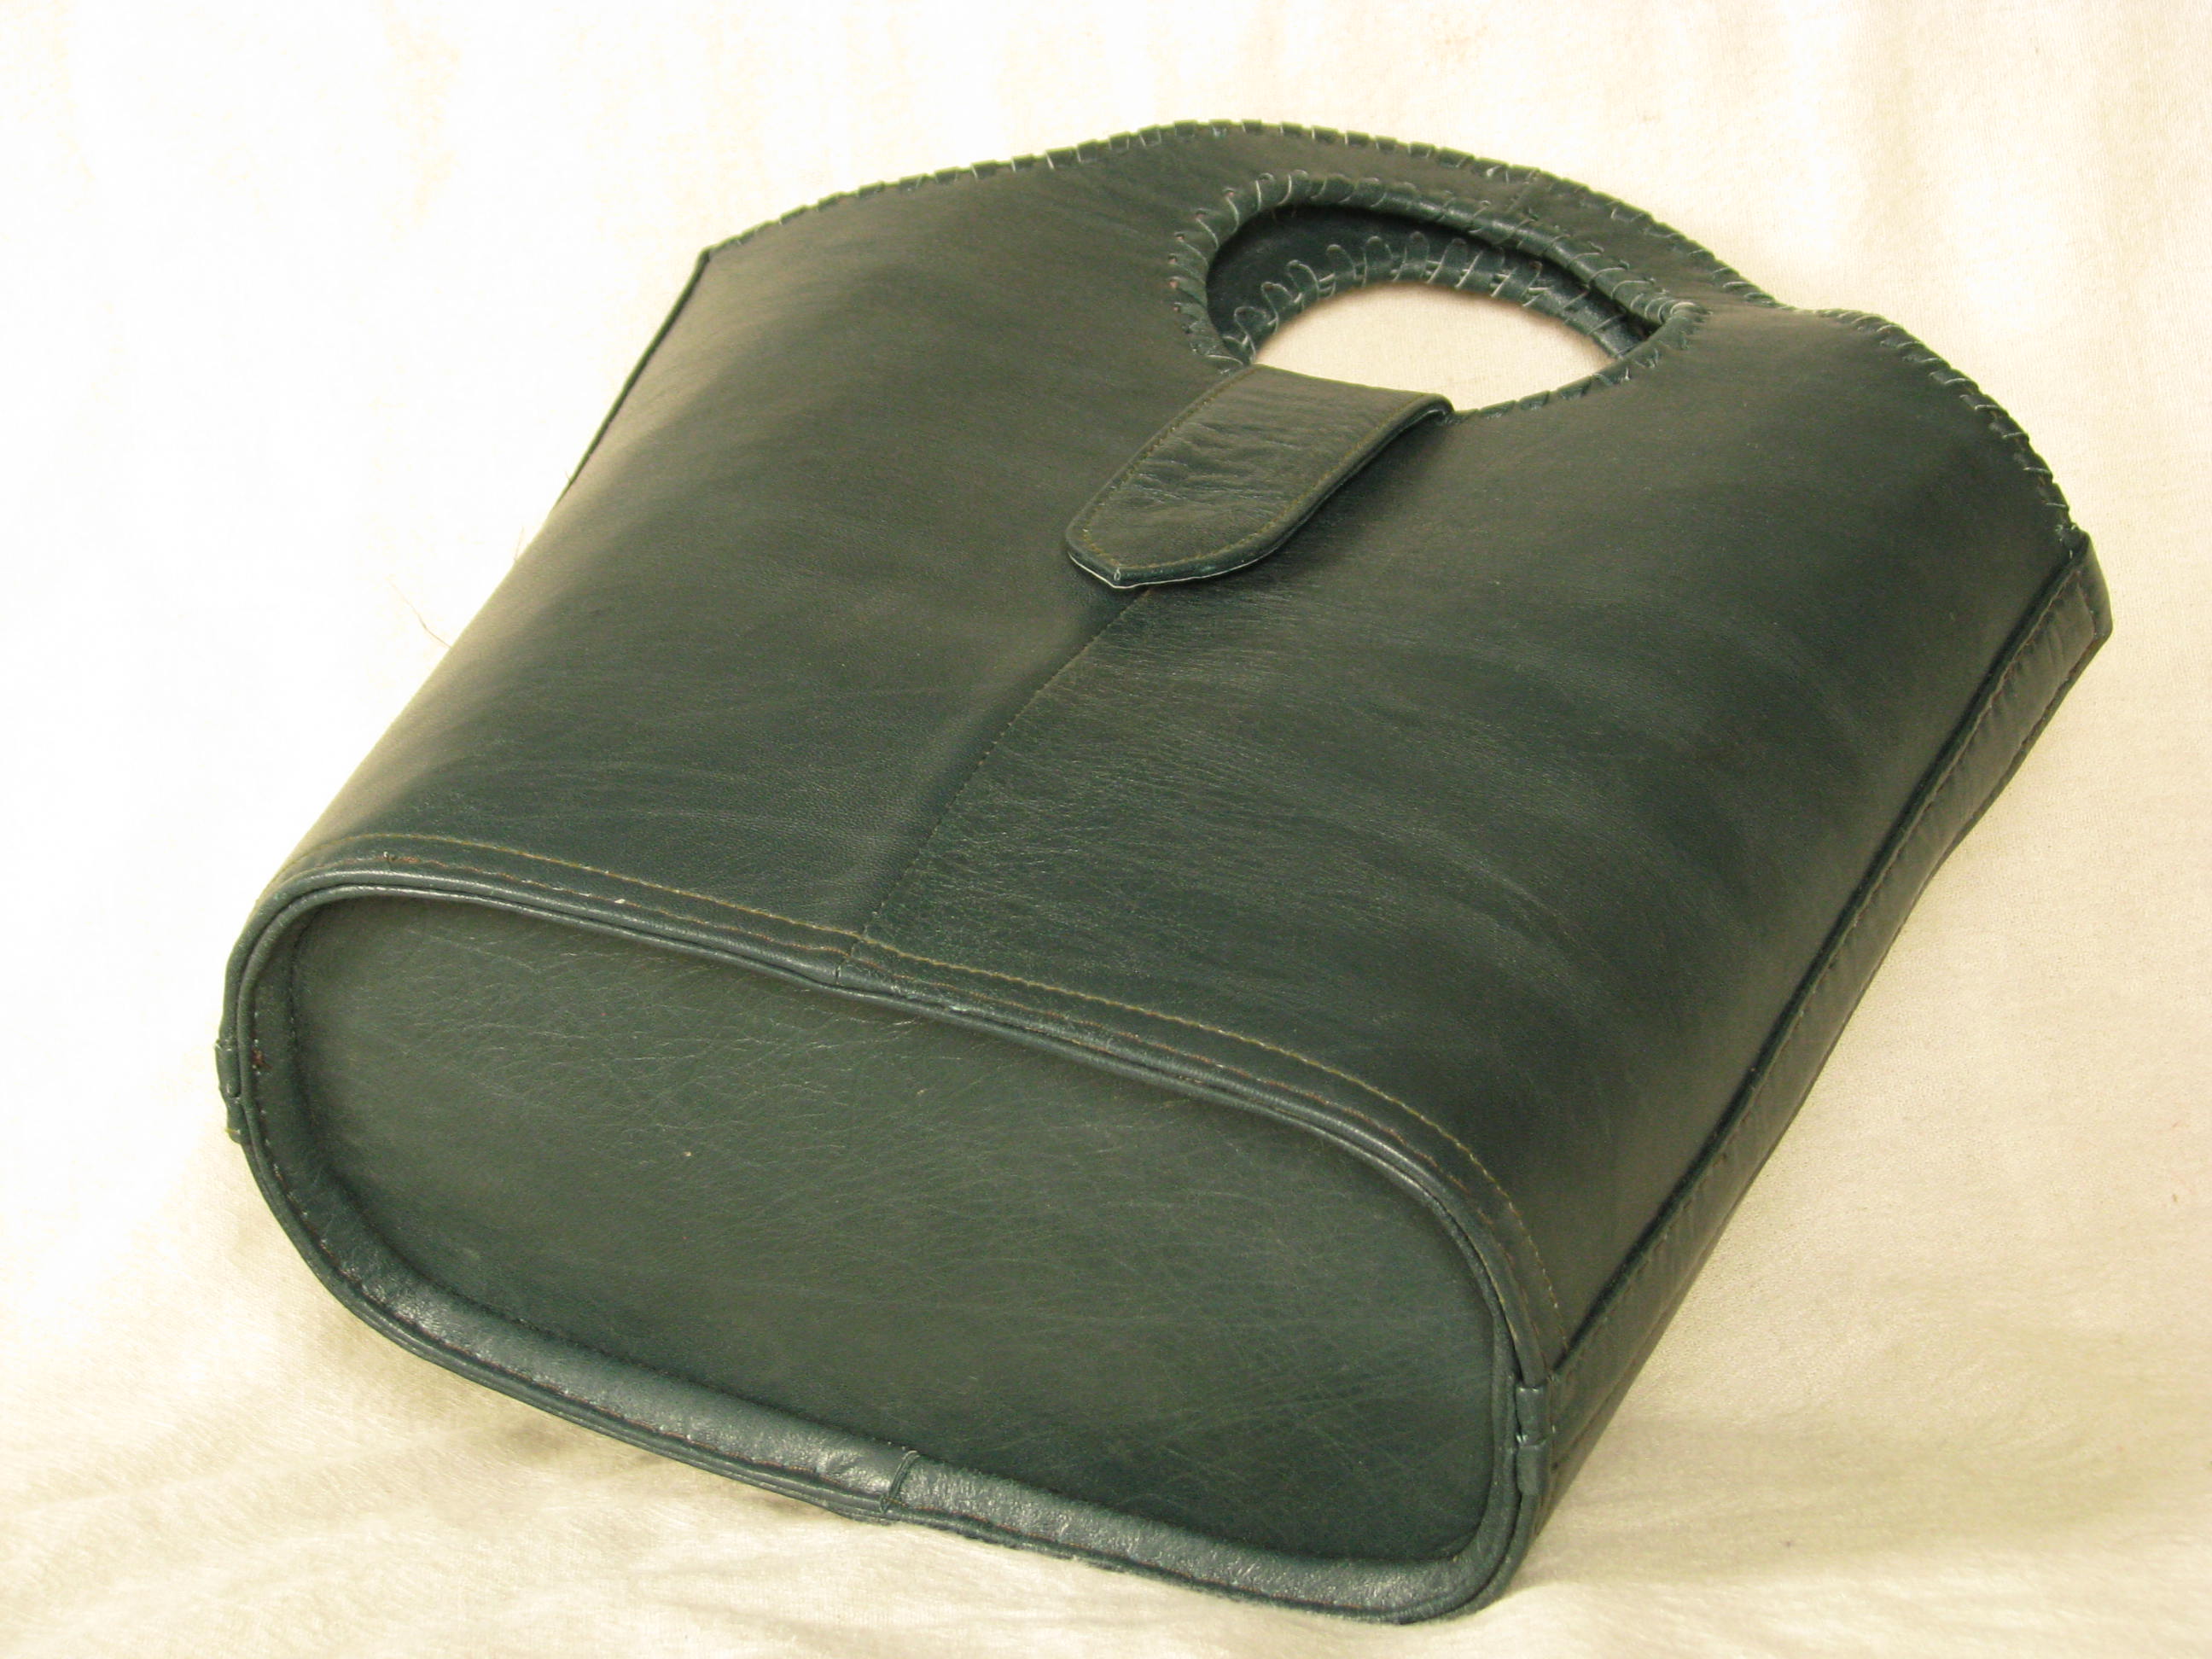 Gundara - dark-green shopping bag - genuine leather - made in Afghanistan - fair trade